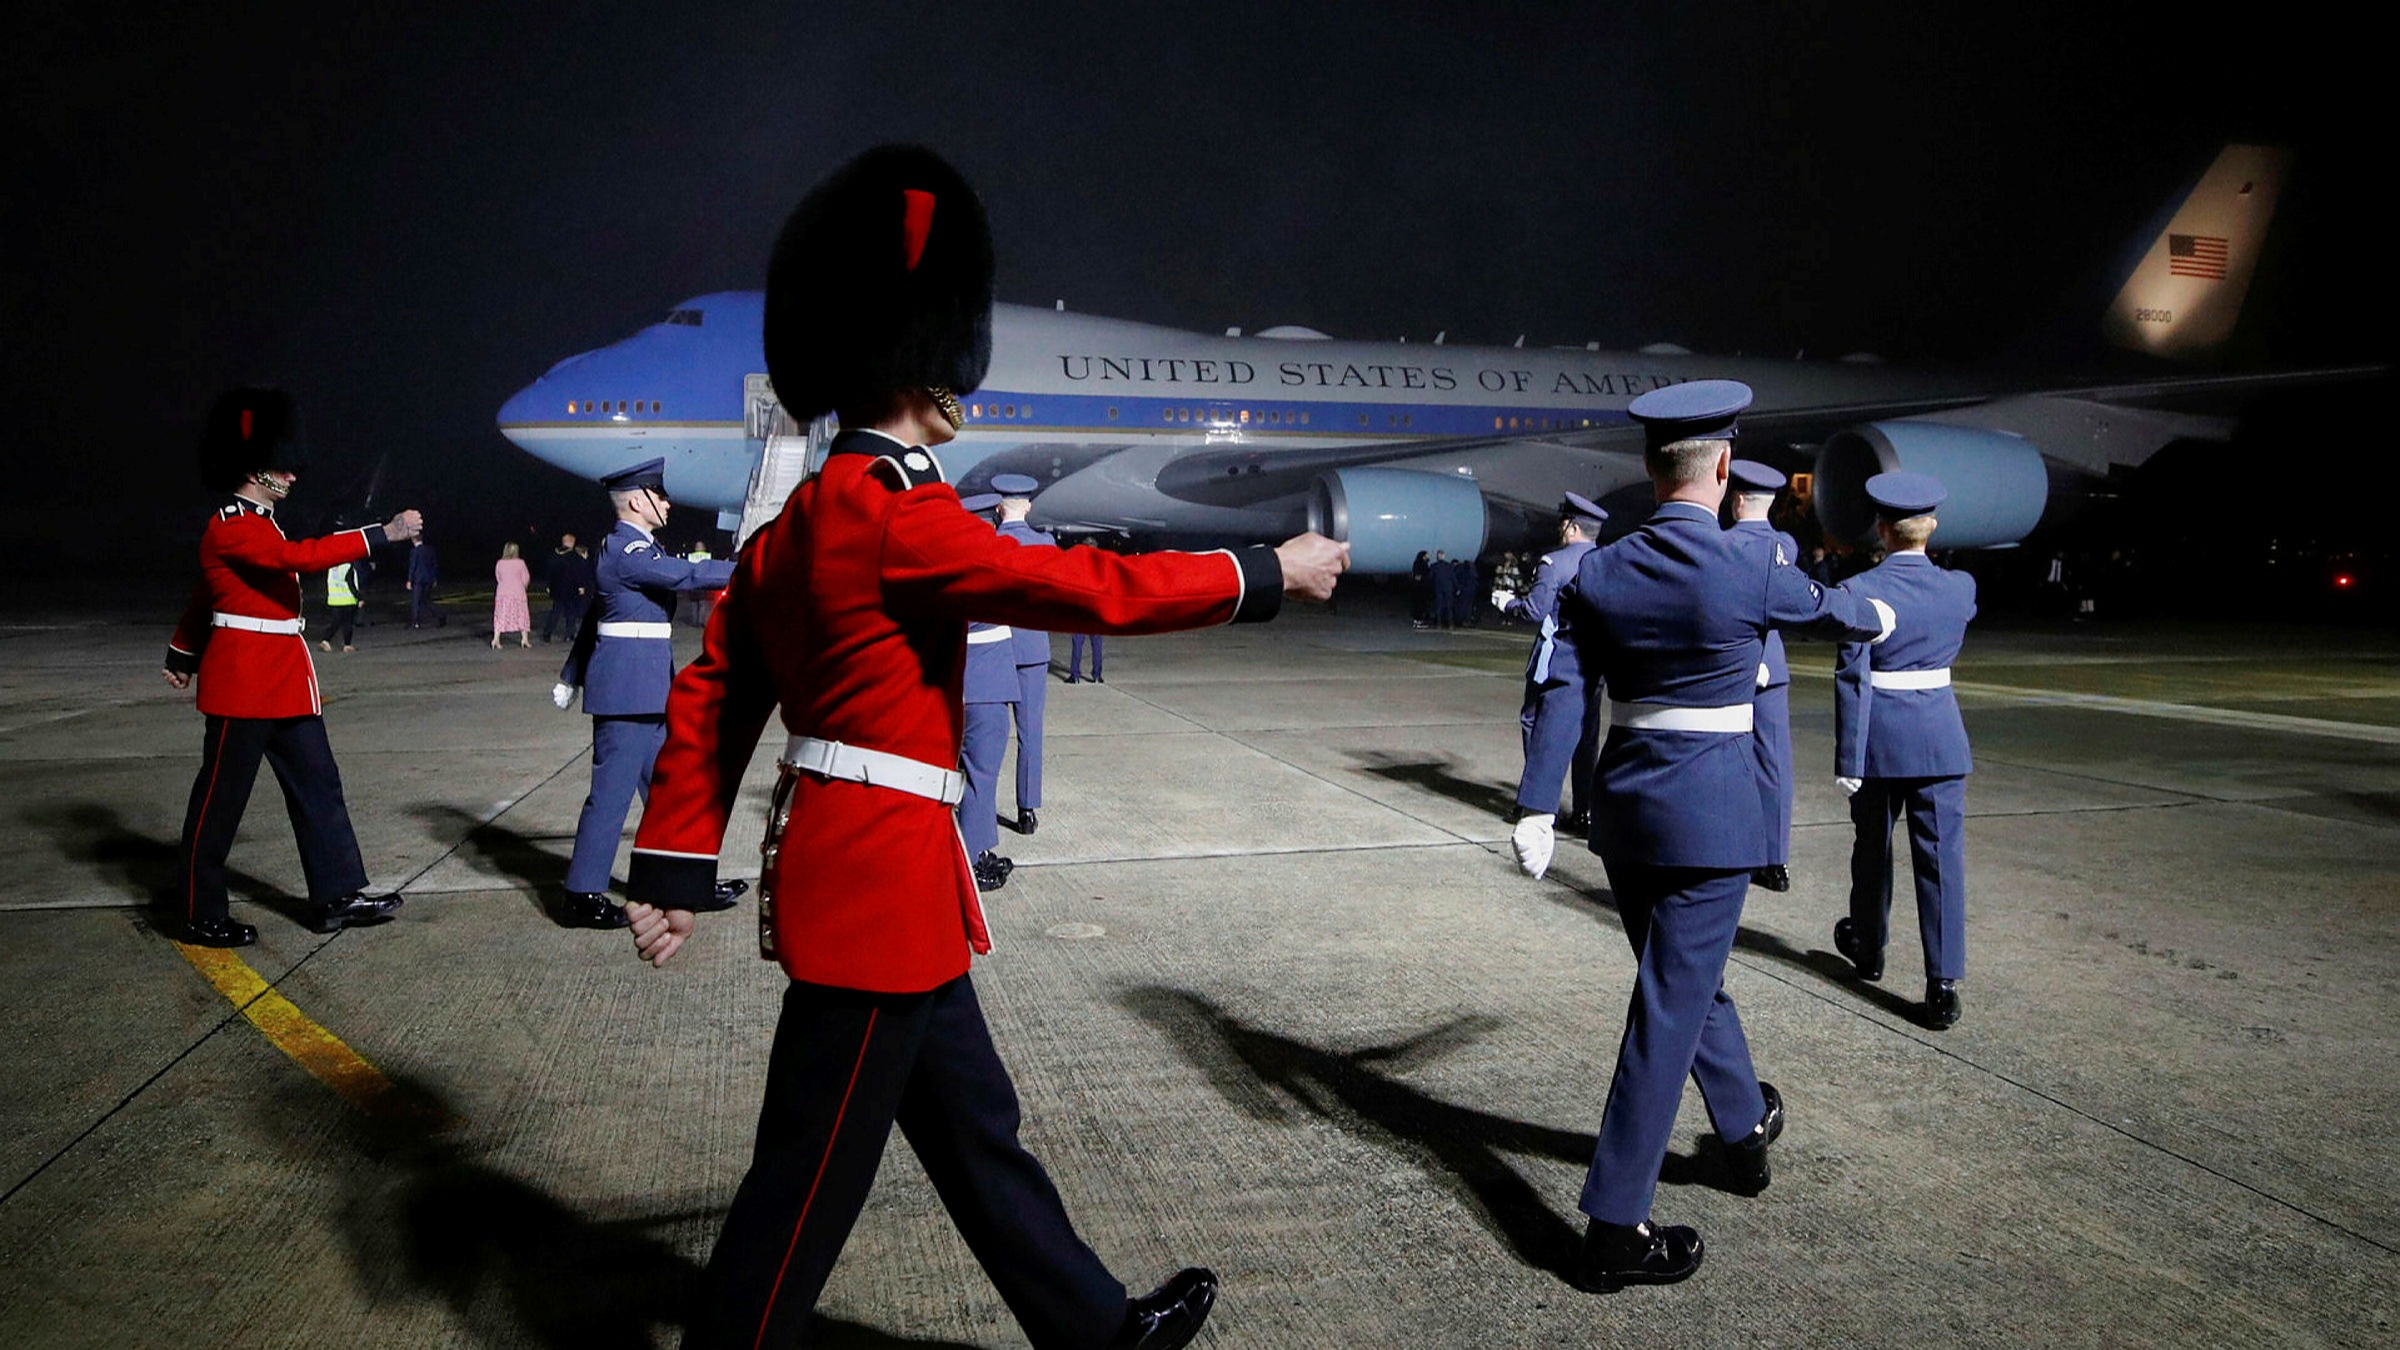 huren vleet welvaart Air Force One delay is latest setback for Boeing | Financial Times